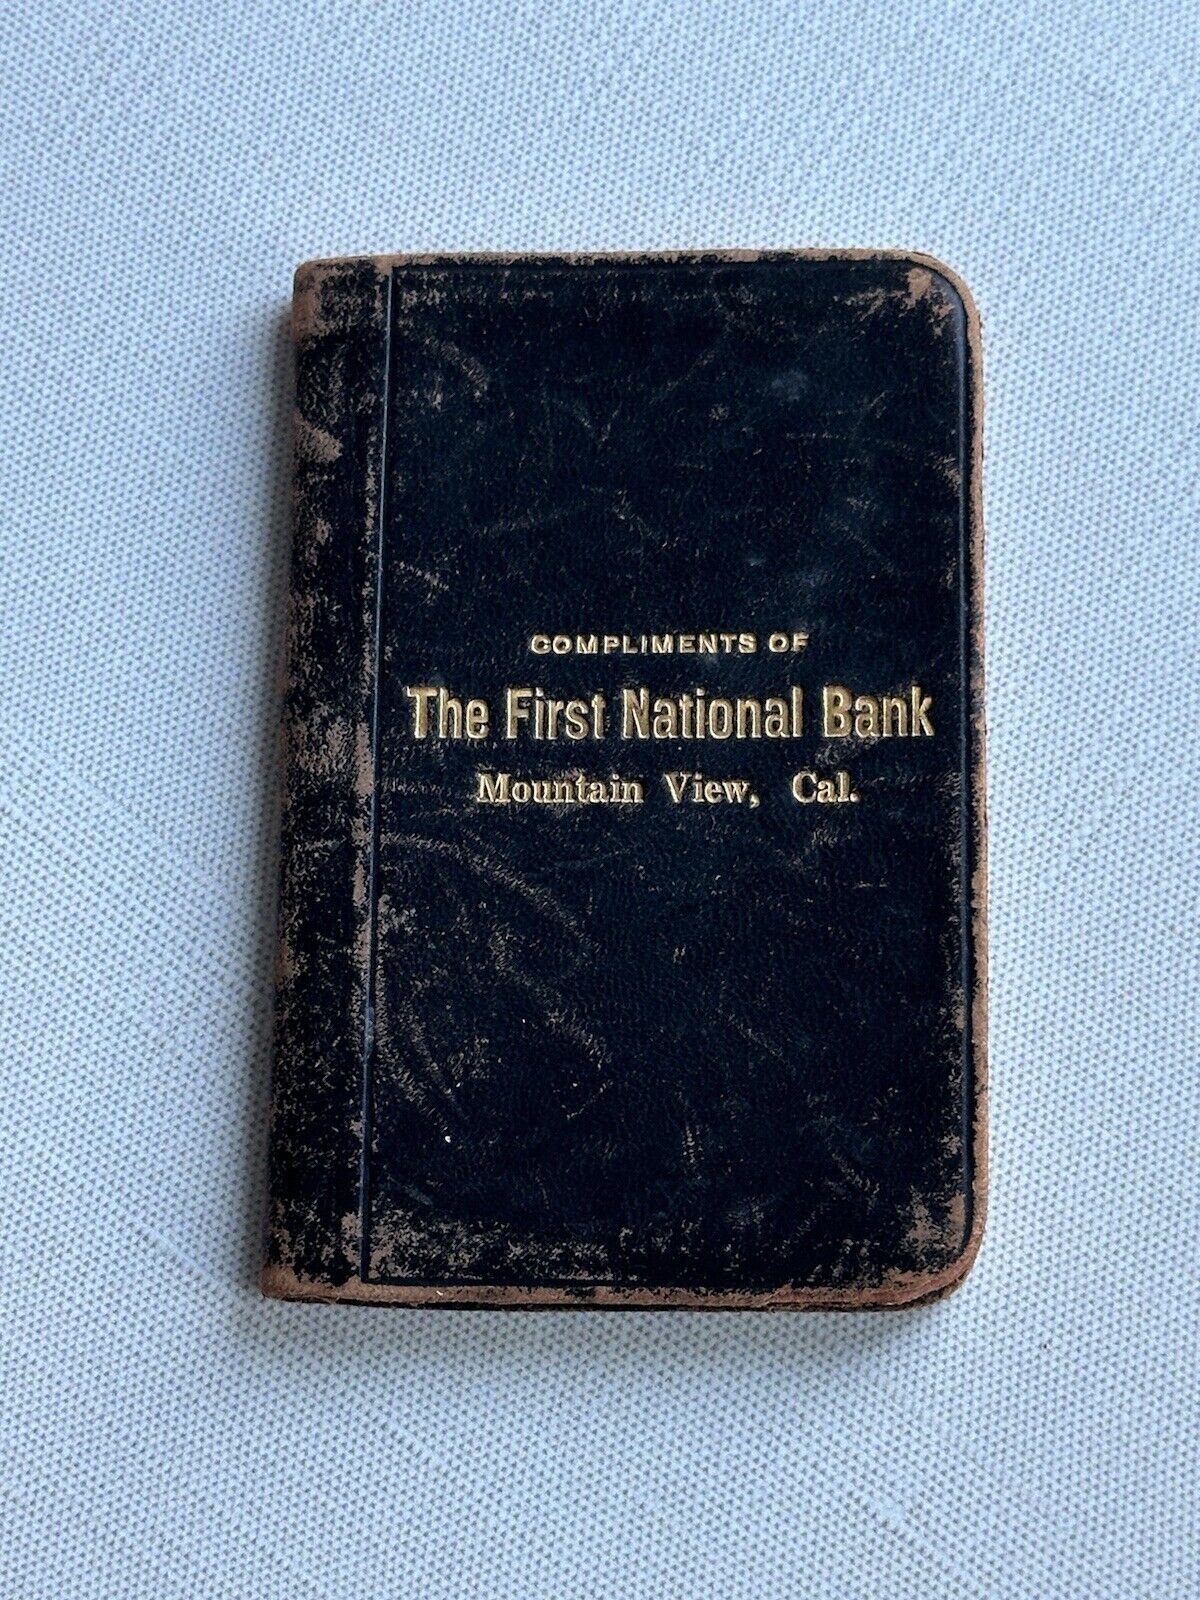 1913 FIRST NATIONAL BANK  SAVINGS BOOK  LOS ANGELES  CALIFORNIA VINTAGE